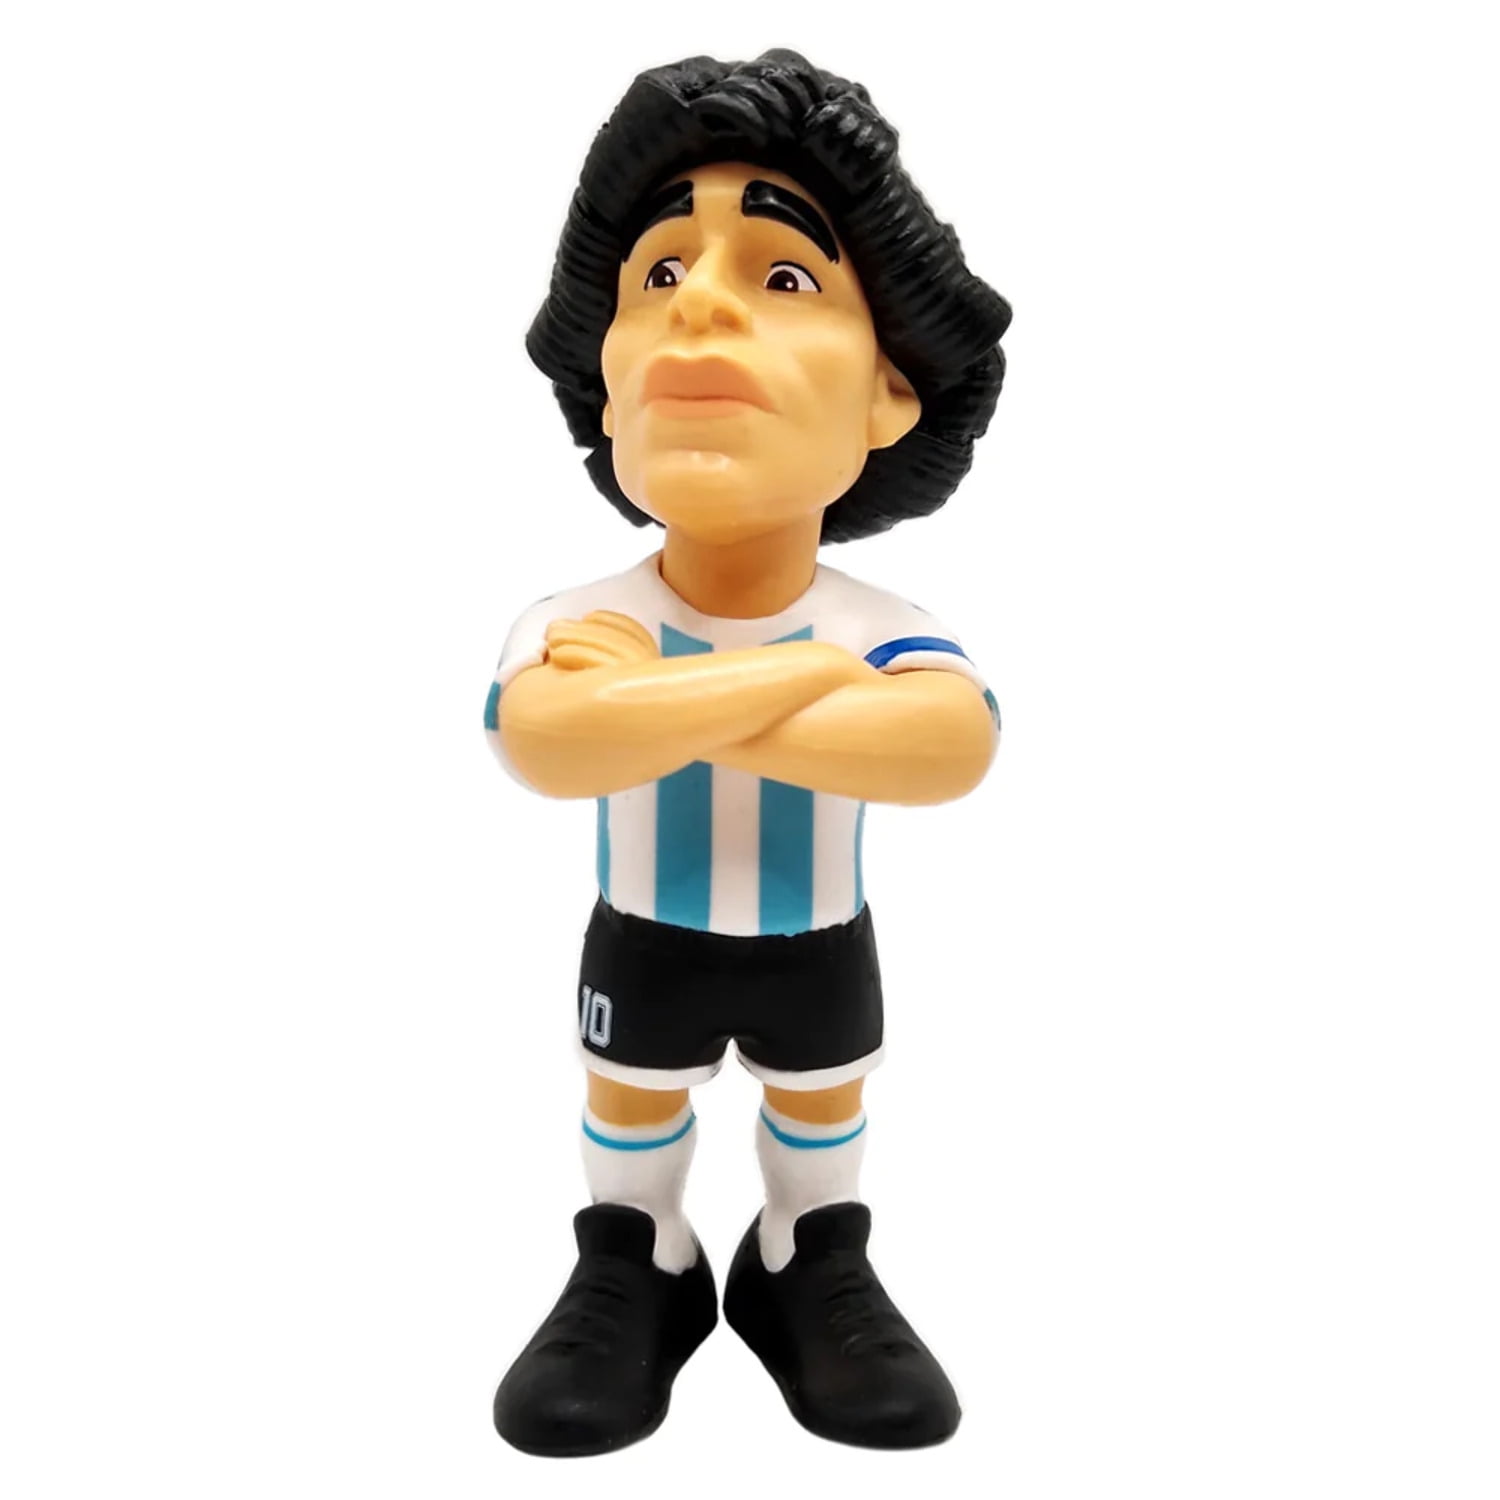 Minix Messi PSG Collectible Figure - SoccerWorld - SoccerWorld